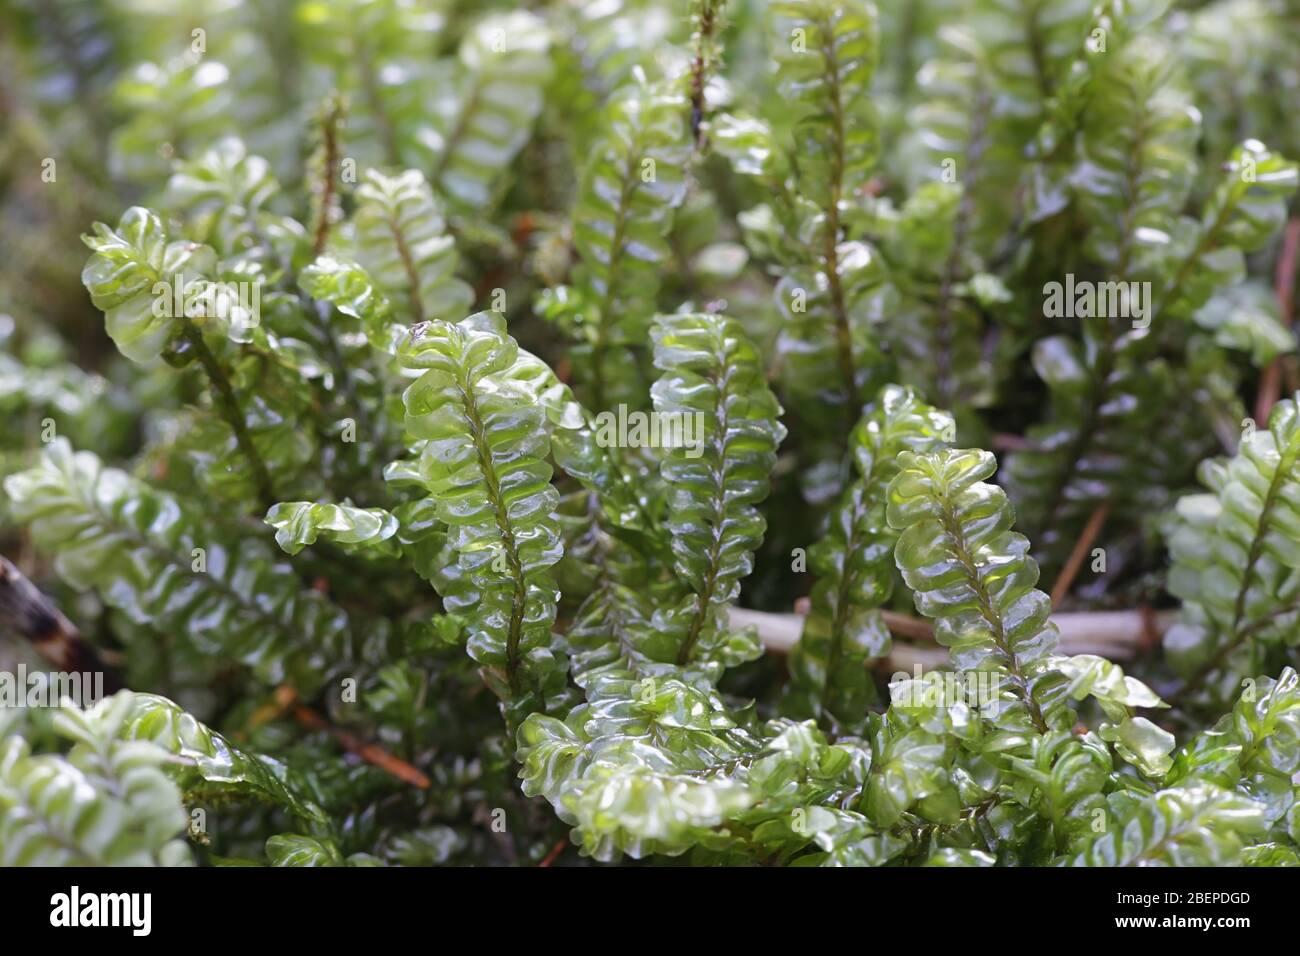 plagiochila-asplenioides-known-as-greater-featherwort-moss-2BEPDGD.jpg